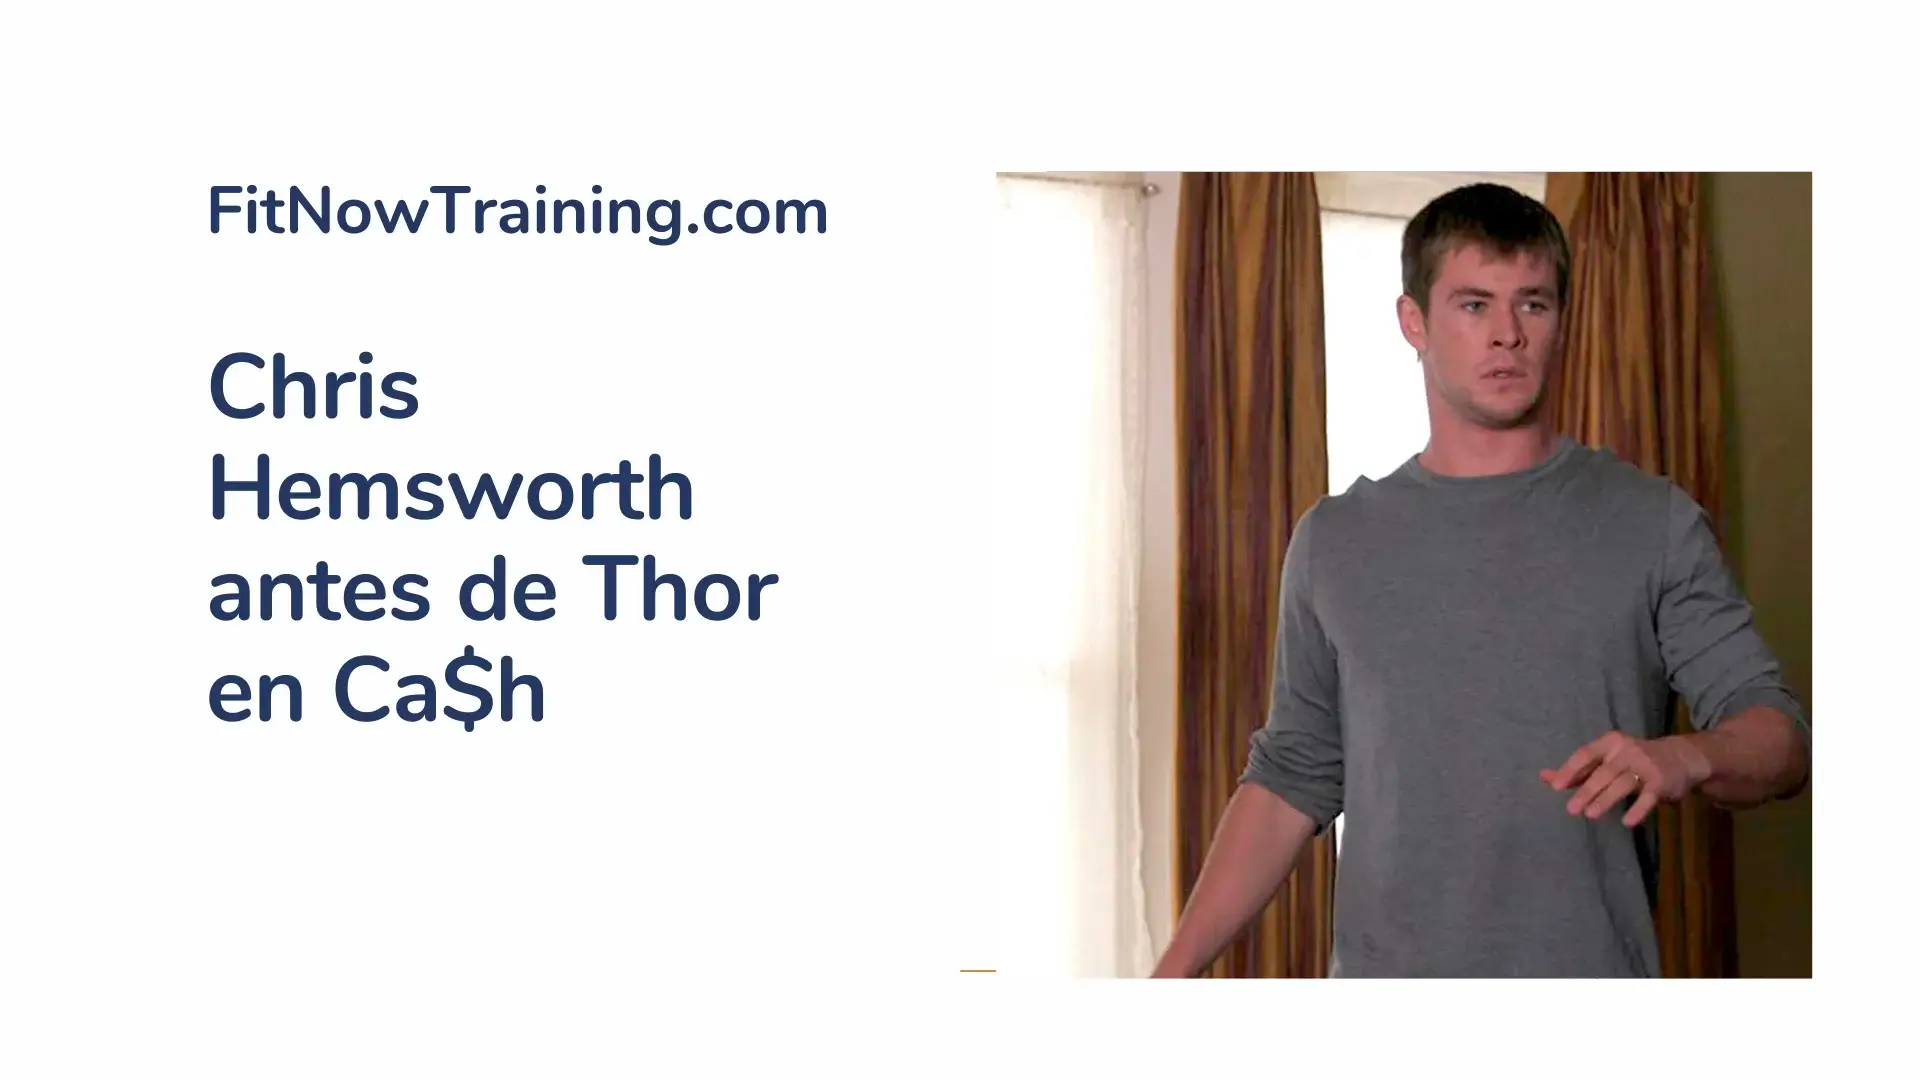 ¿Chris Hemsworth (Thor) toma esteroides?